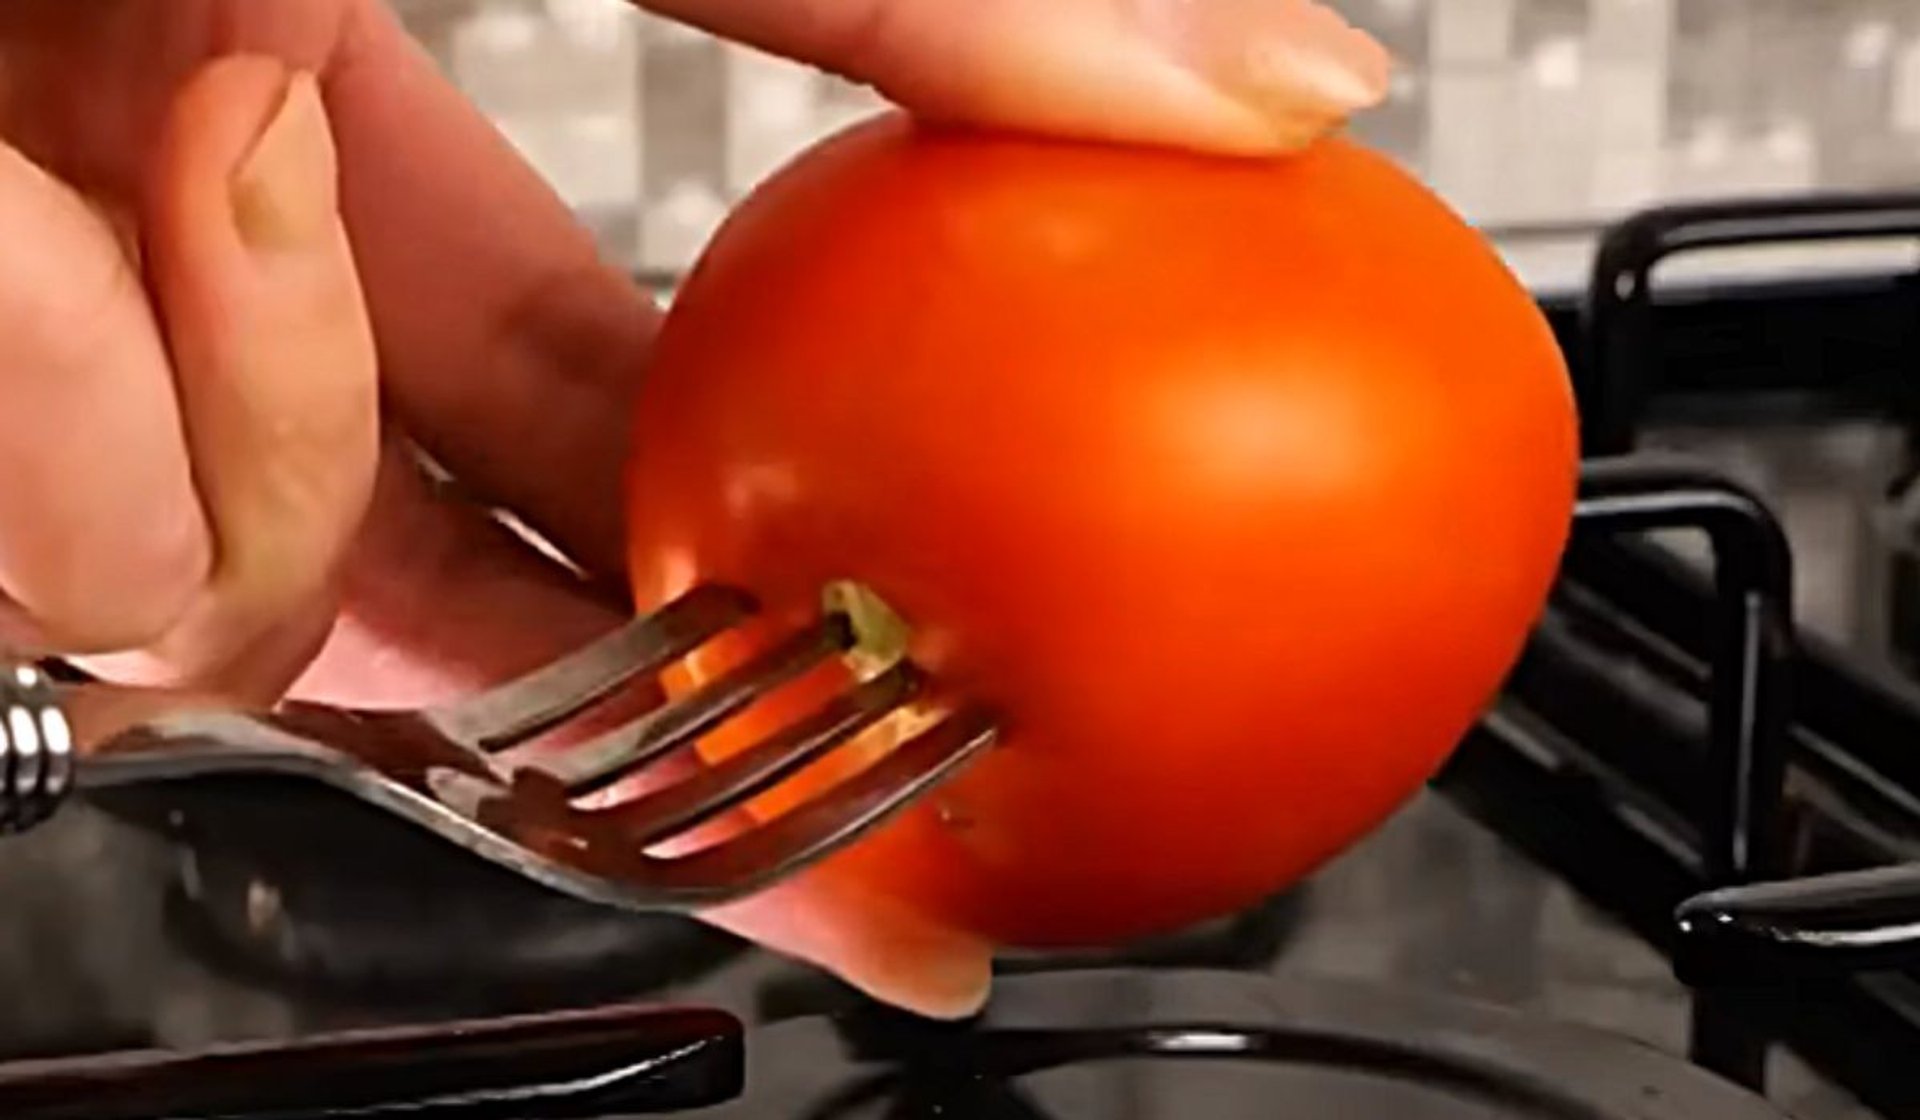 pomidor na widelcu